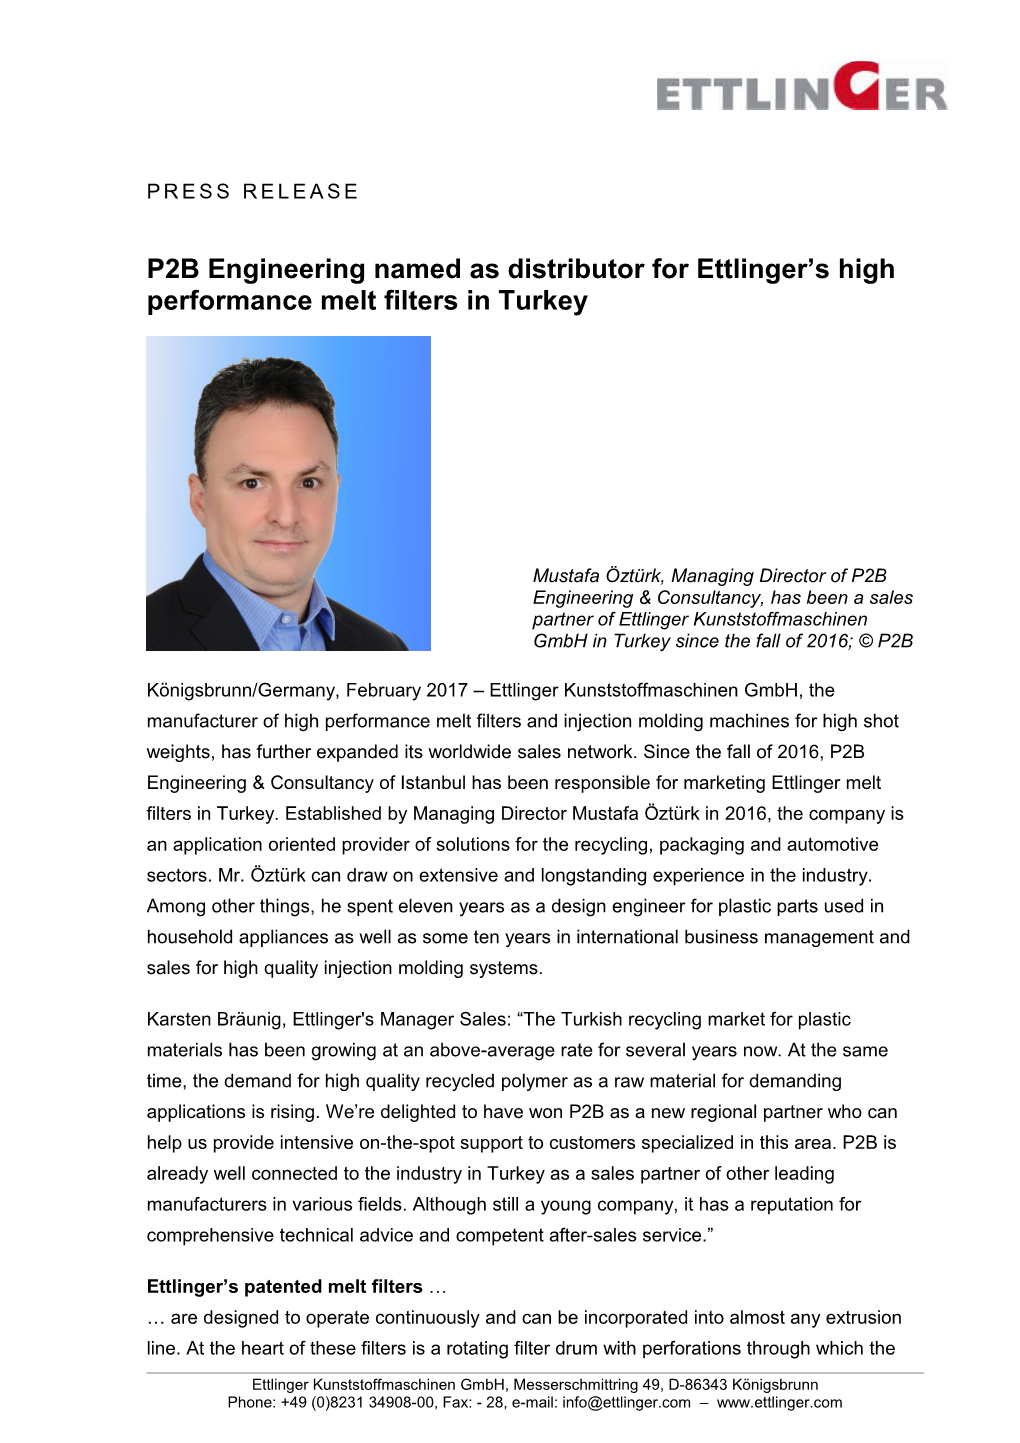 P2B Engineering Named As Distributor for Ettlinger S High Performance Melt Filters in Turkey